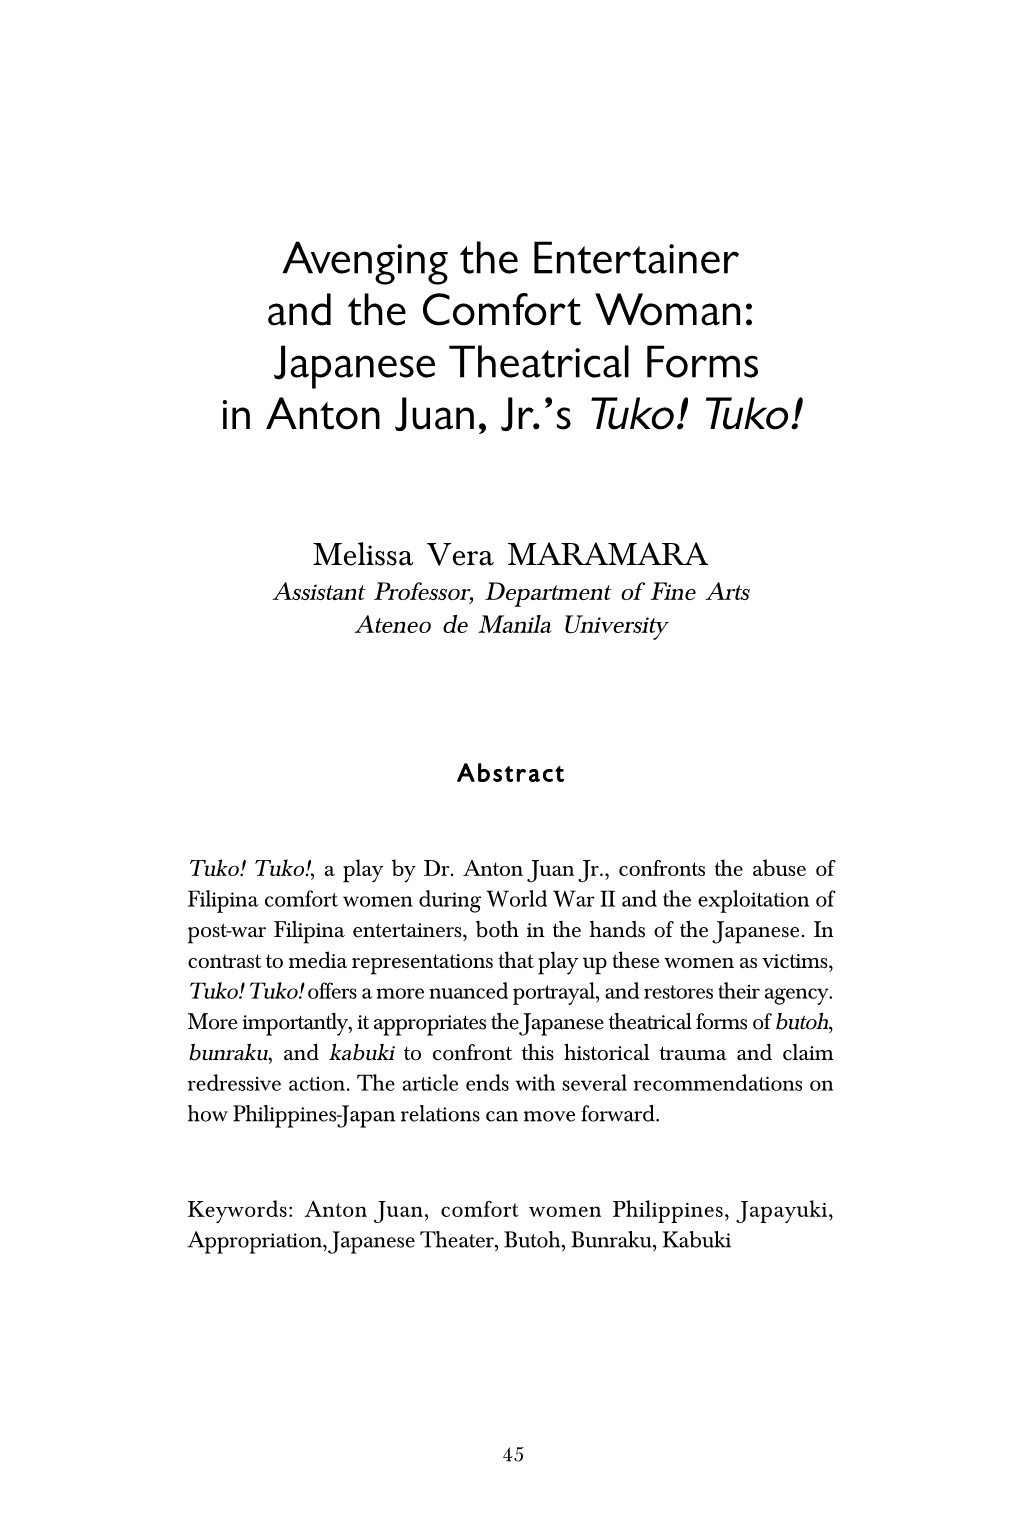 Japanese Theatrical Forms in Anton Juan Jr.'S Tuko